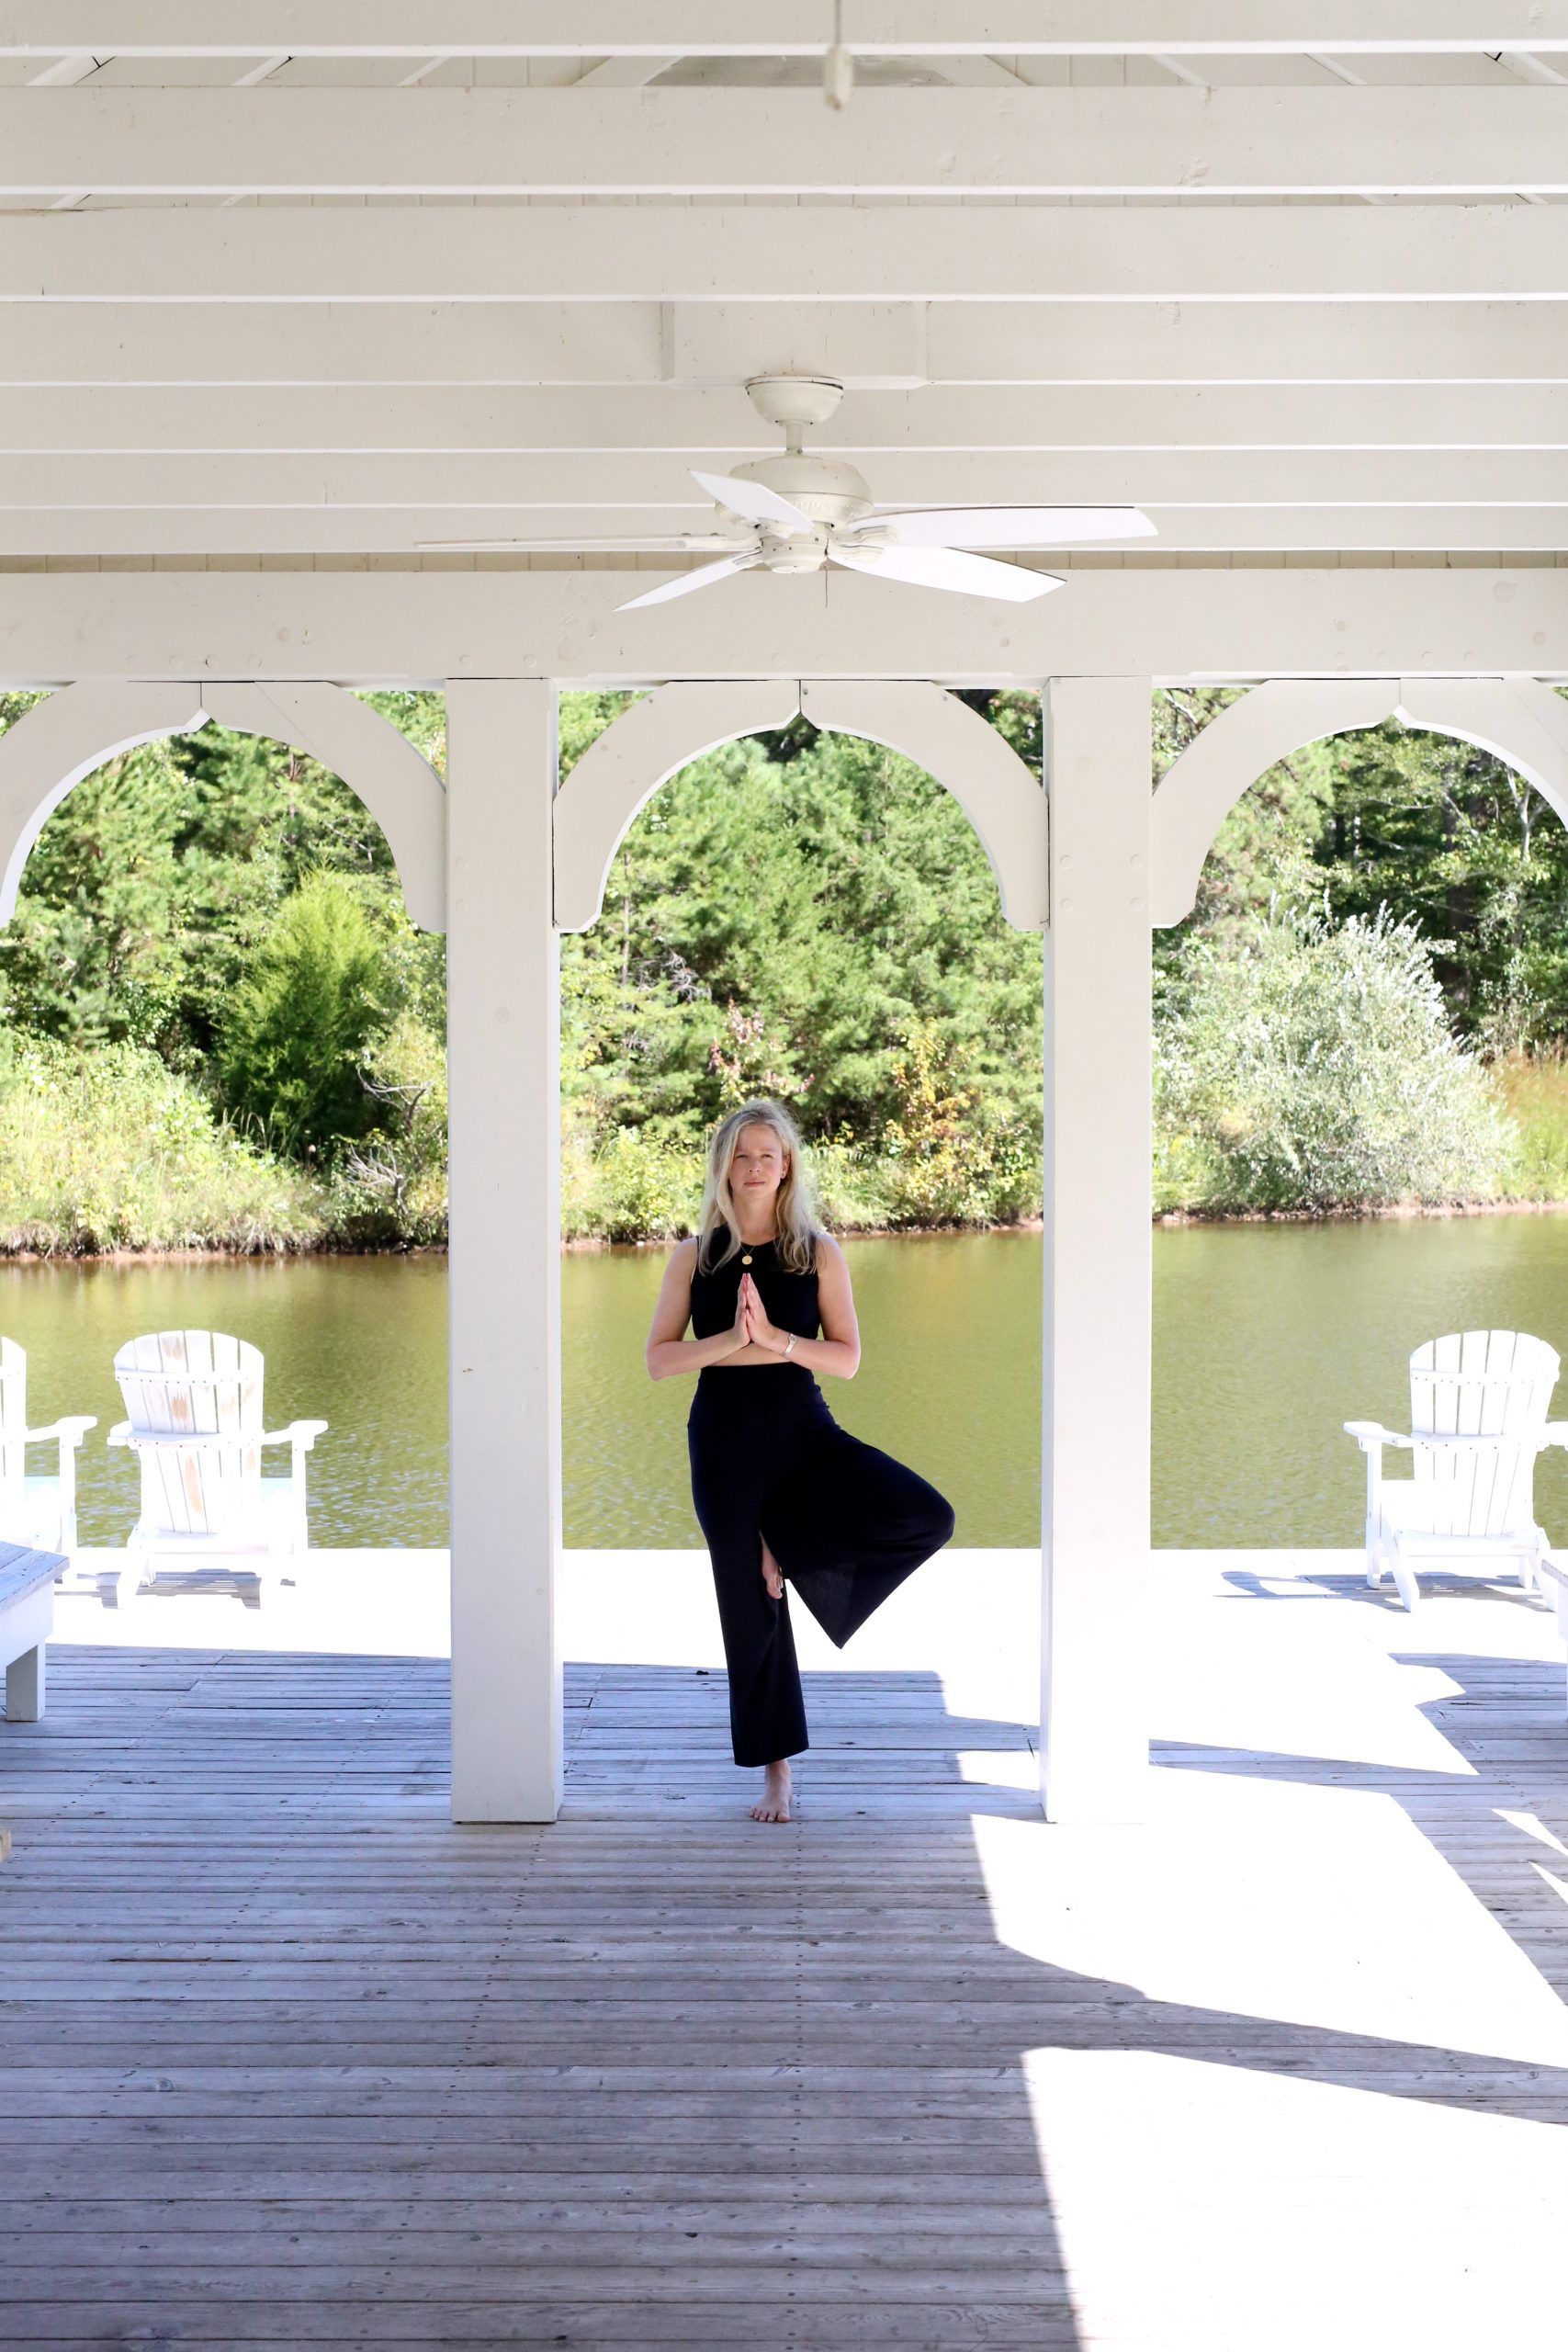 Chrissy Carter at Blackberry Farm Yoga Retreat